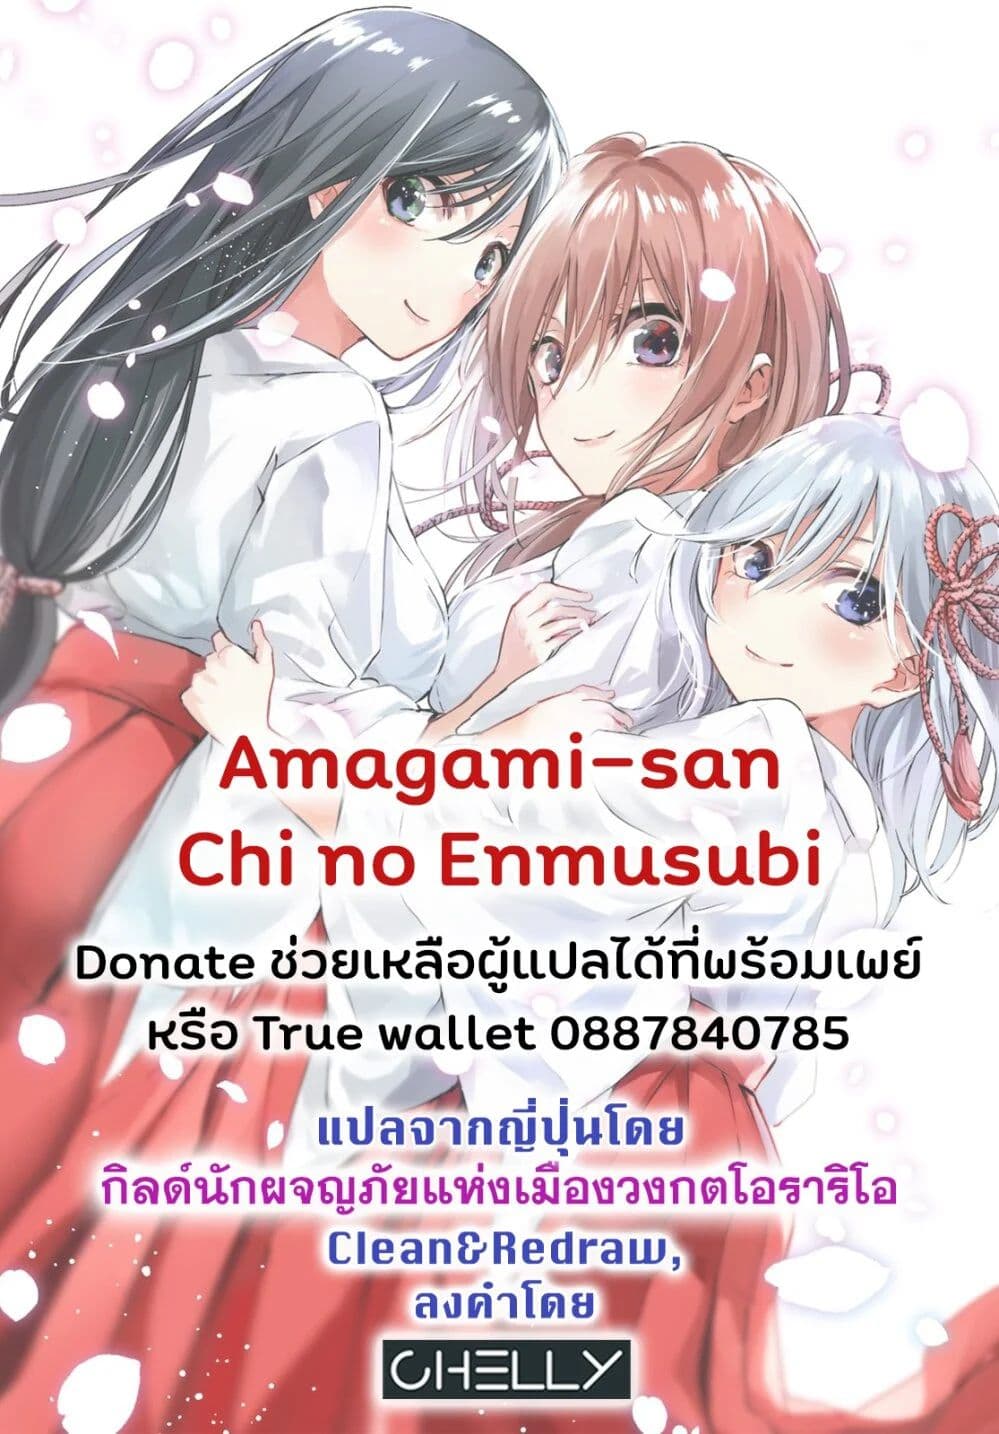 Amagami-san Chi no Enmusubi ผูกสัมพันธ์ที่บ้านคุณอามากามิ 2-คำอธิษฐานและนกกระเรียน